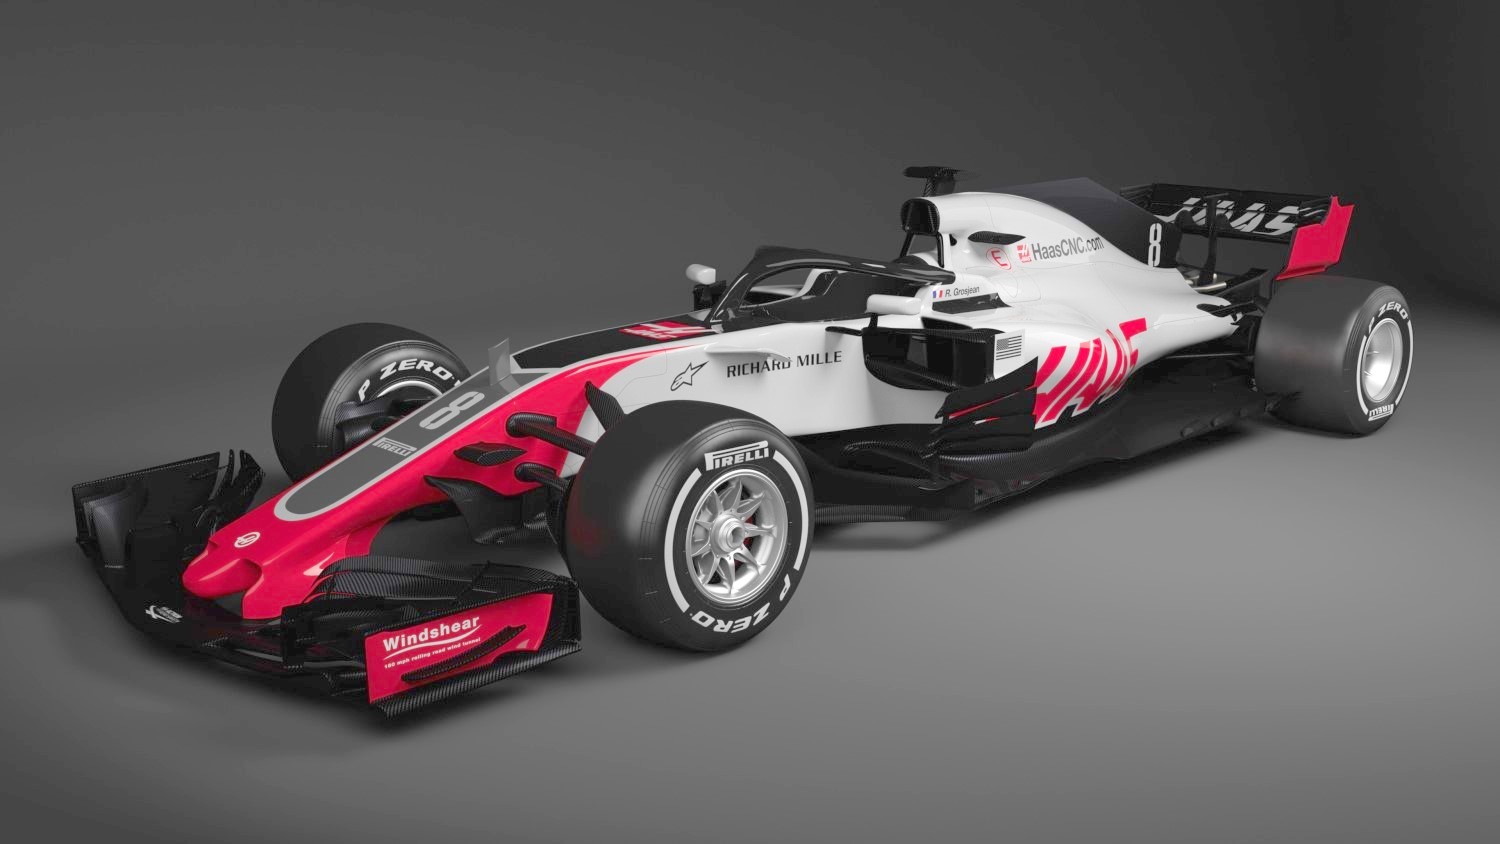 The Haas looks like an evolution of last year's Ferrari to us. Did Ferrari just hand them last year's blueprints?